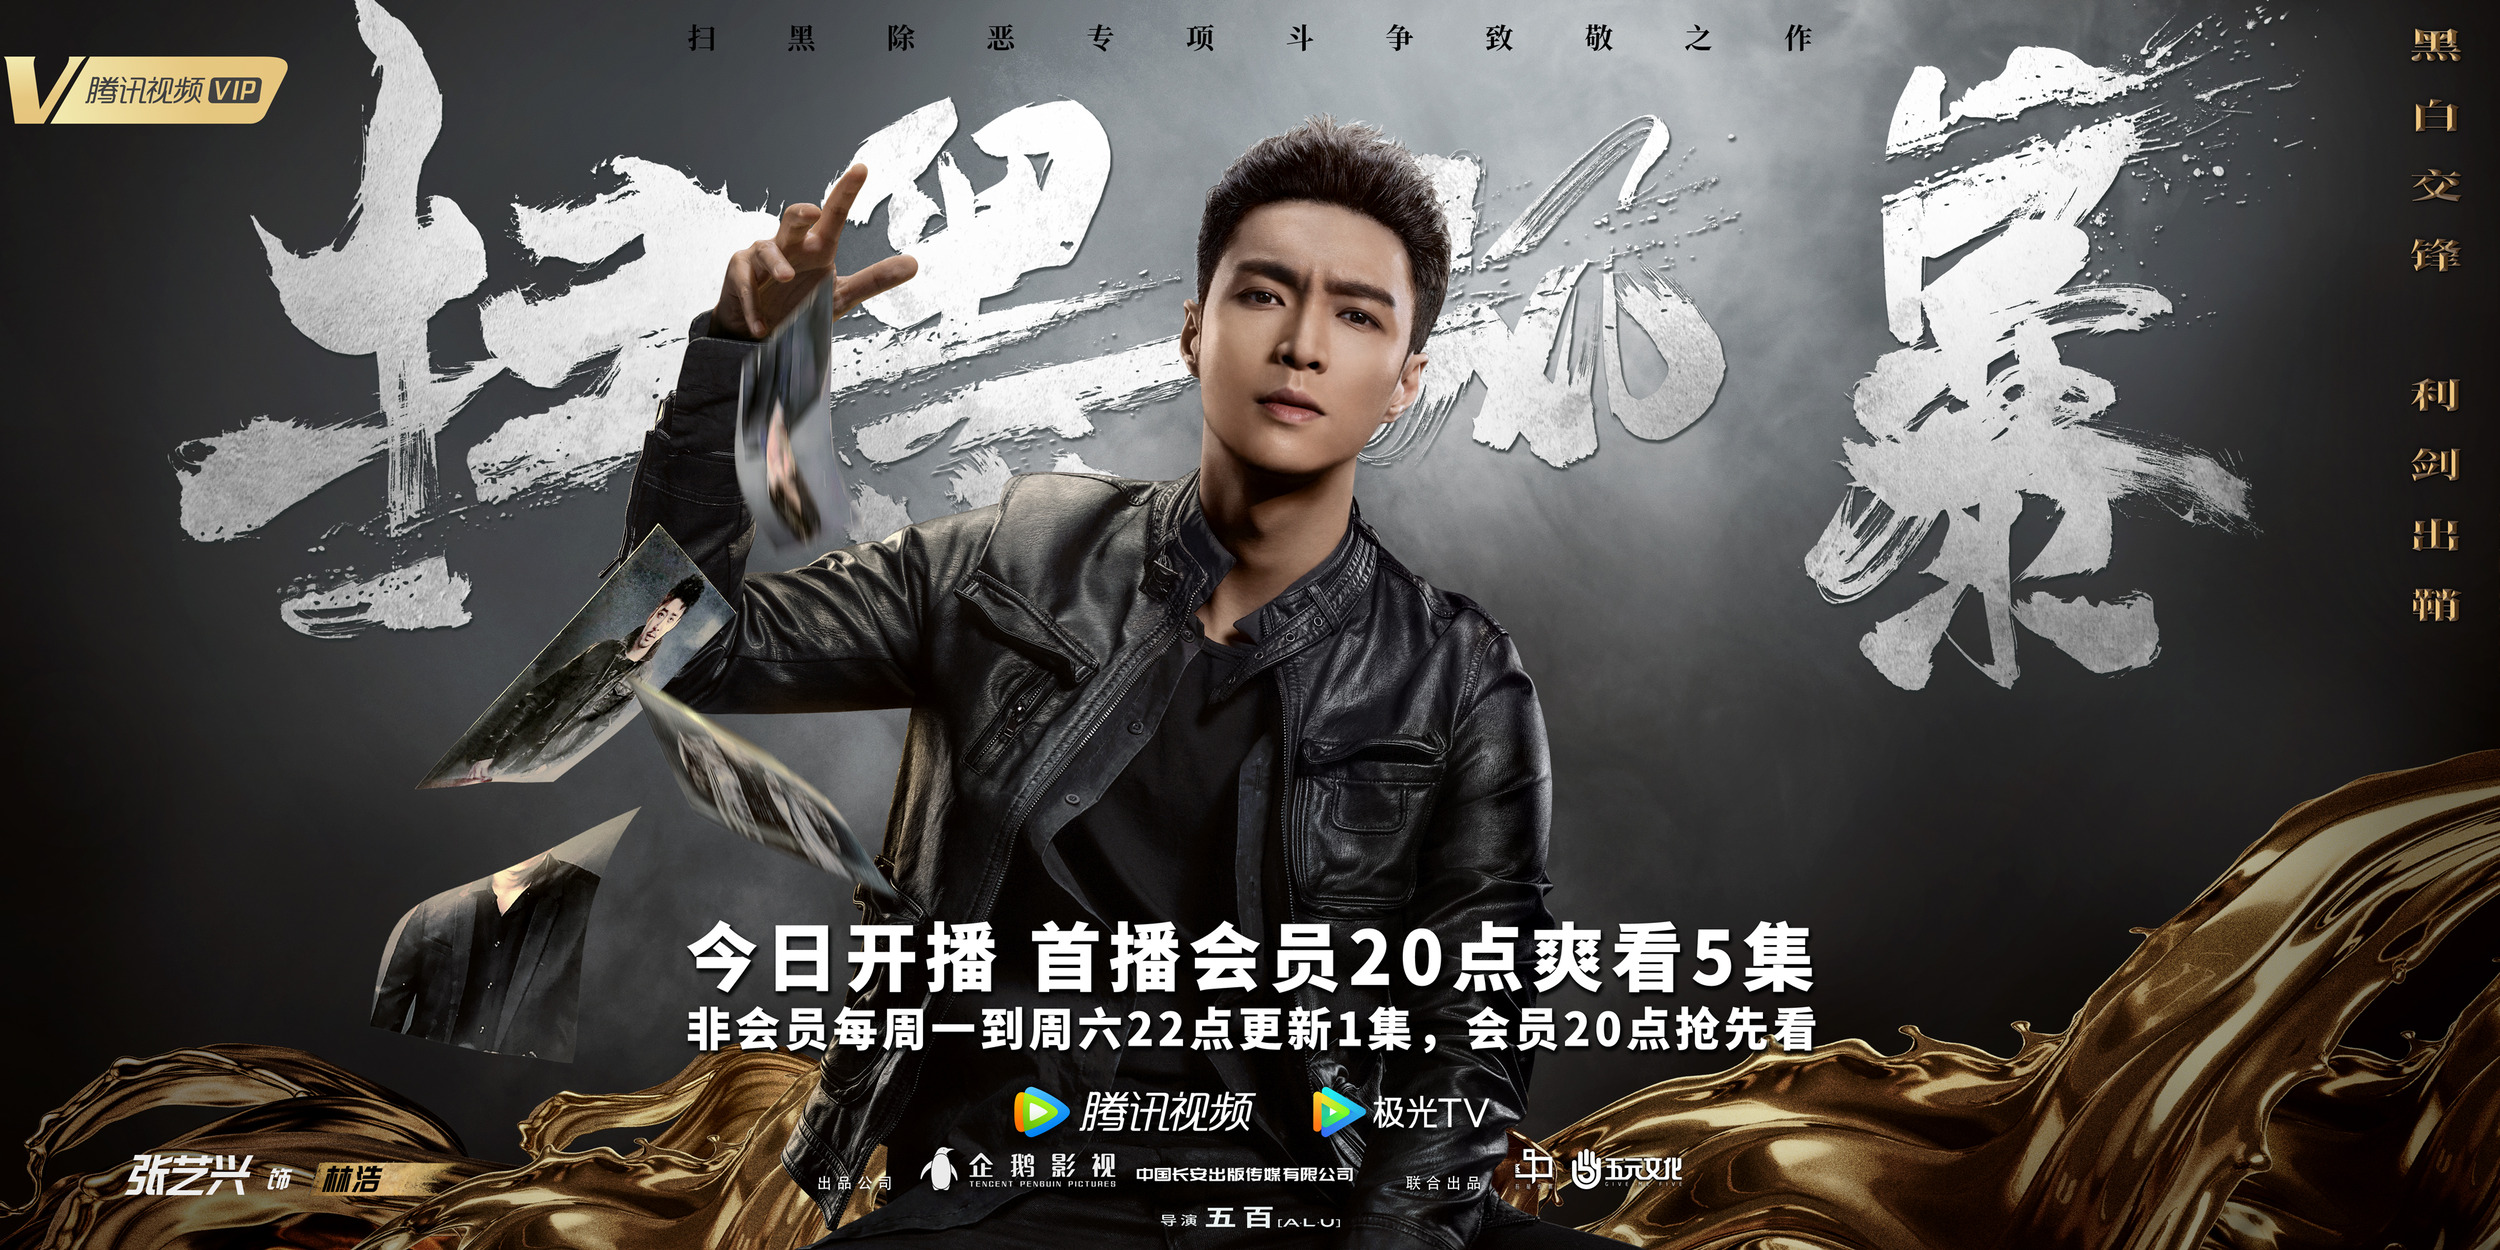 Mega Sized TV Poster Image for Sao hei feng bao (#7 of 9)